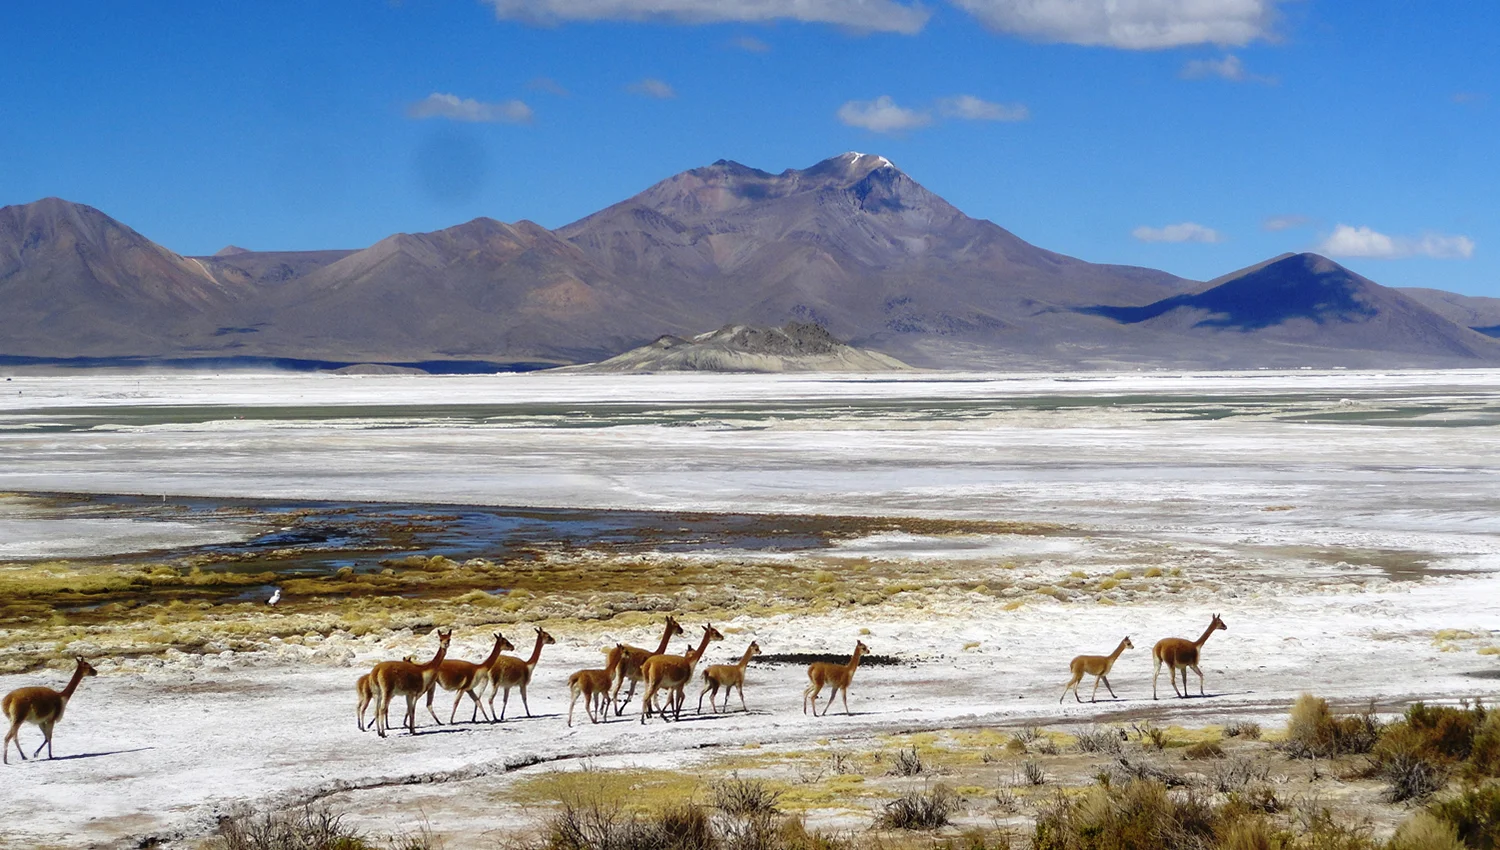 Chilean Altiplano, Salt Lake Surire